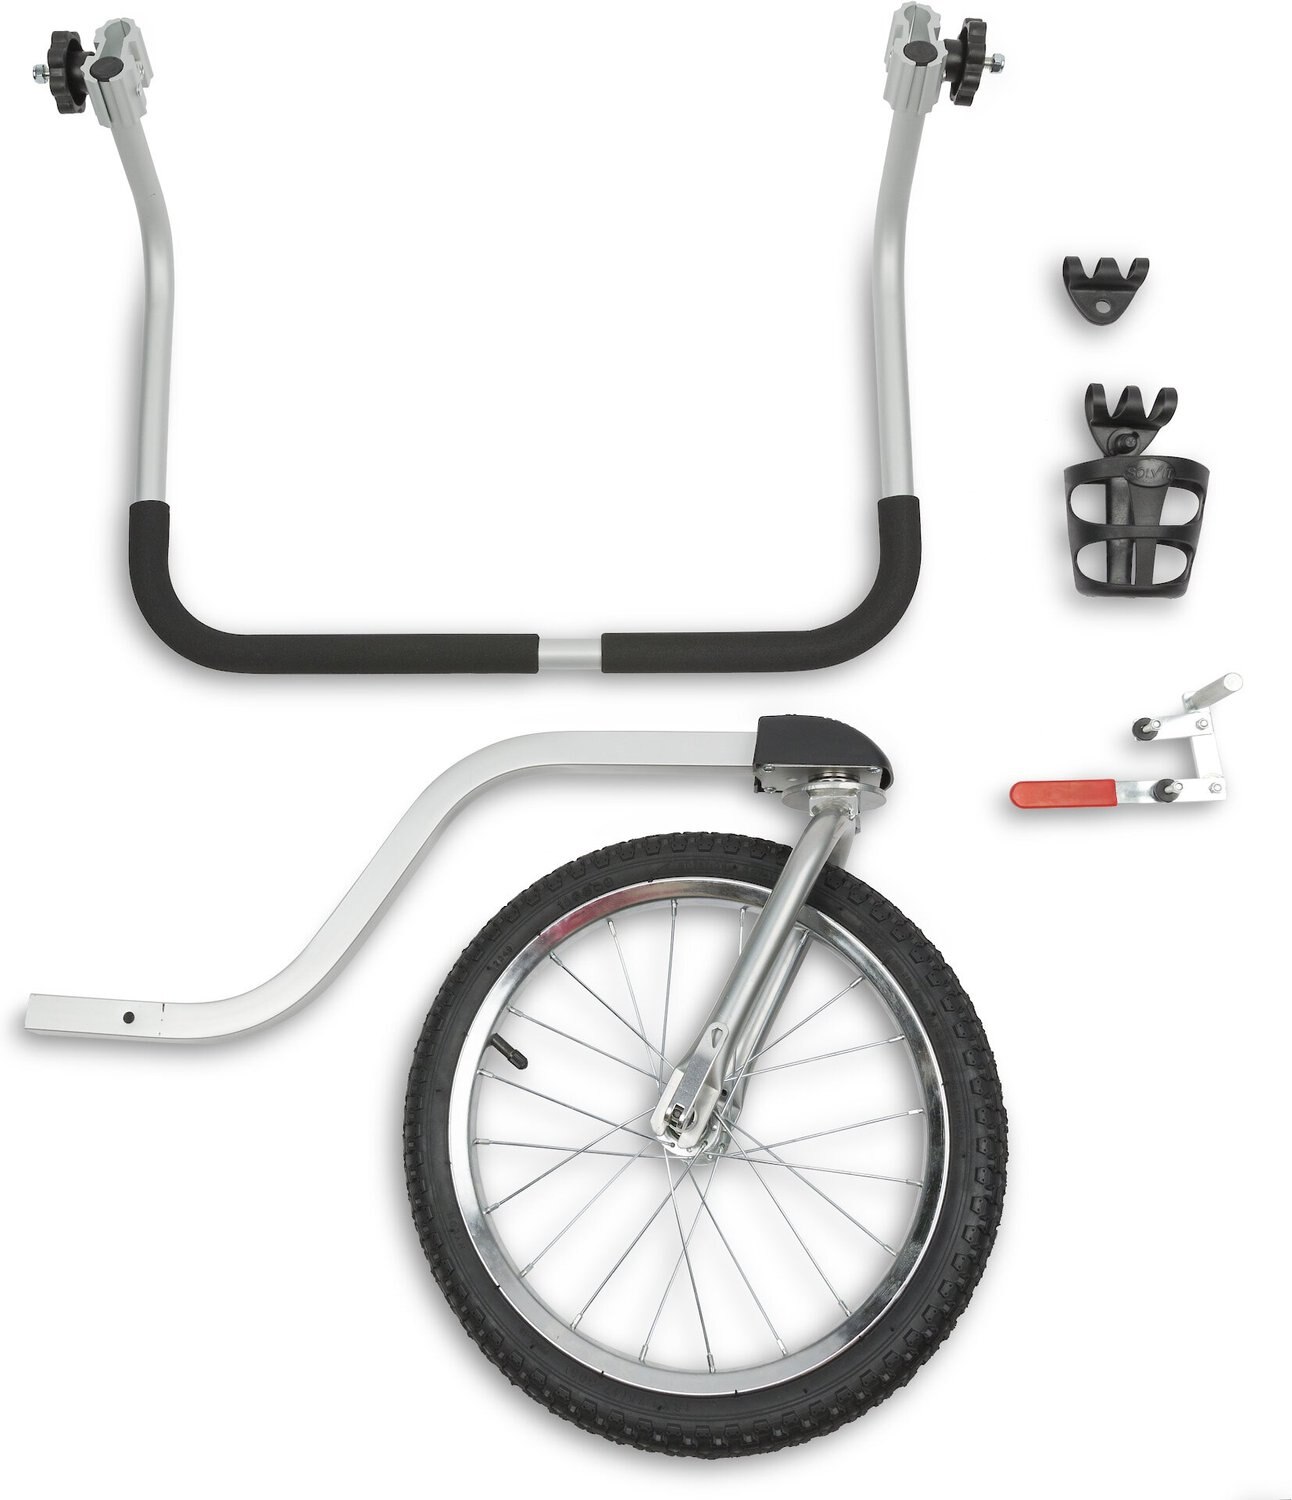 bike trailer stroller conversion kit